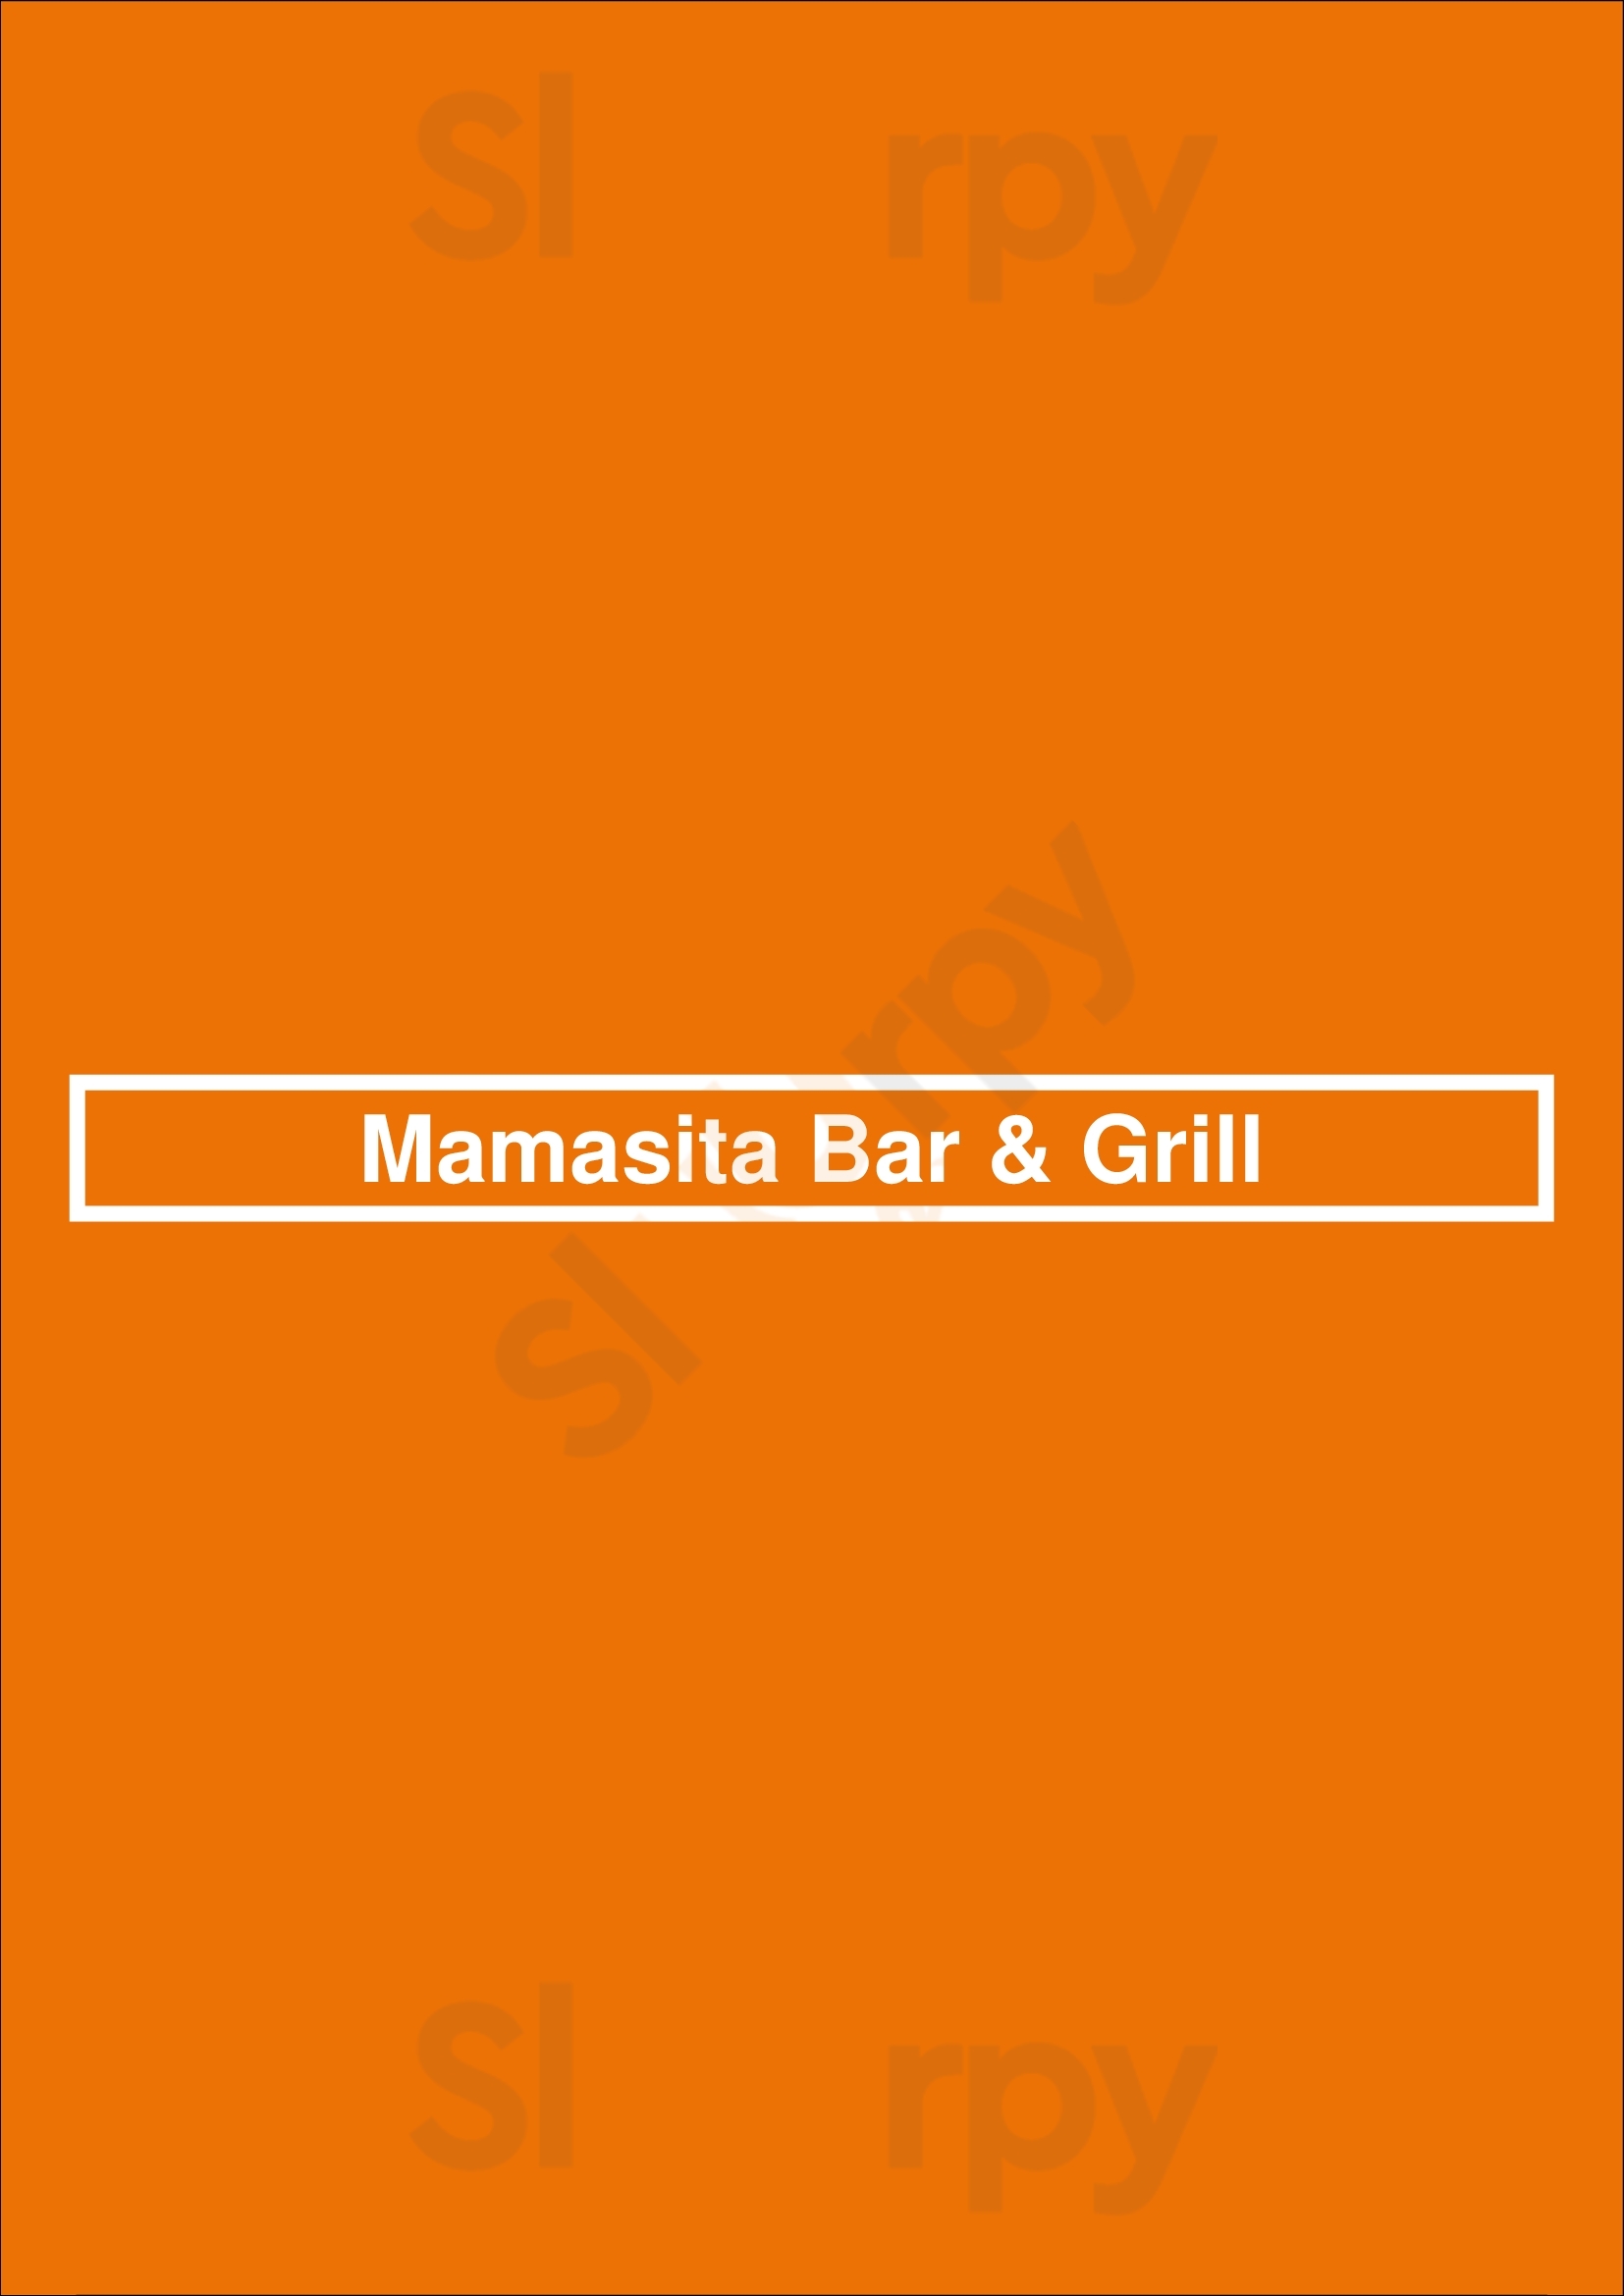 Mamasita Bar & Grill New York City Menu - 1